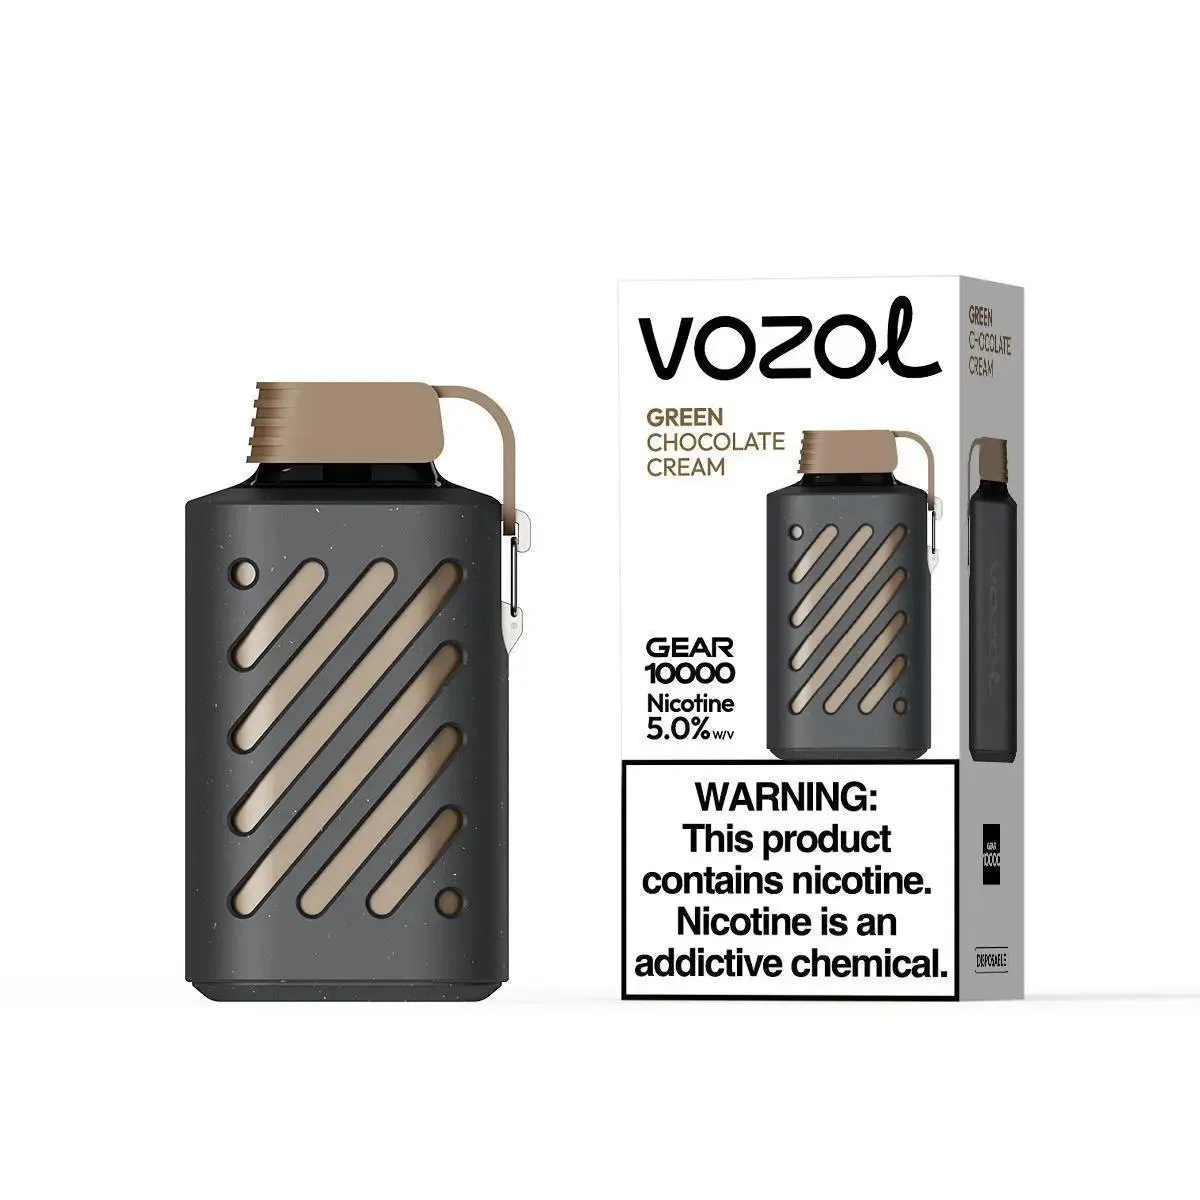 USA populaire jetable ecigarette de gros Original Vozol Gear 5000 7000 10000 Bouffées